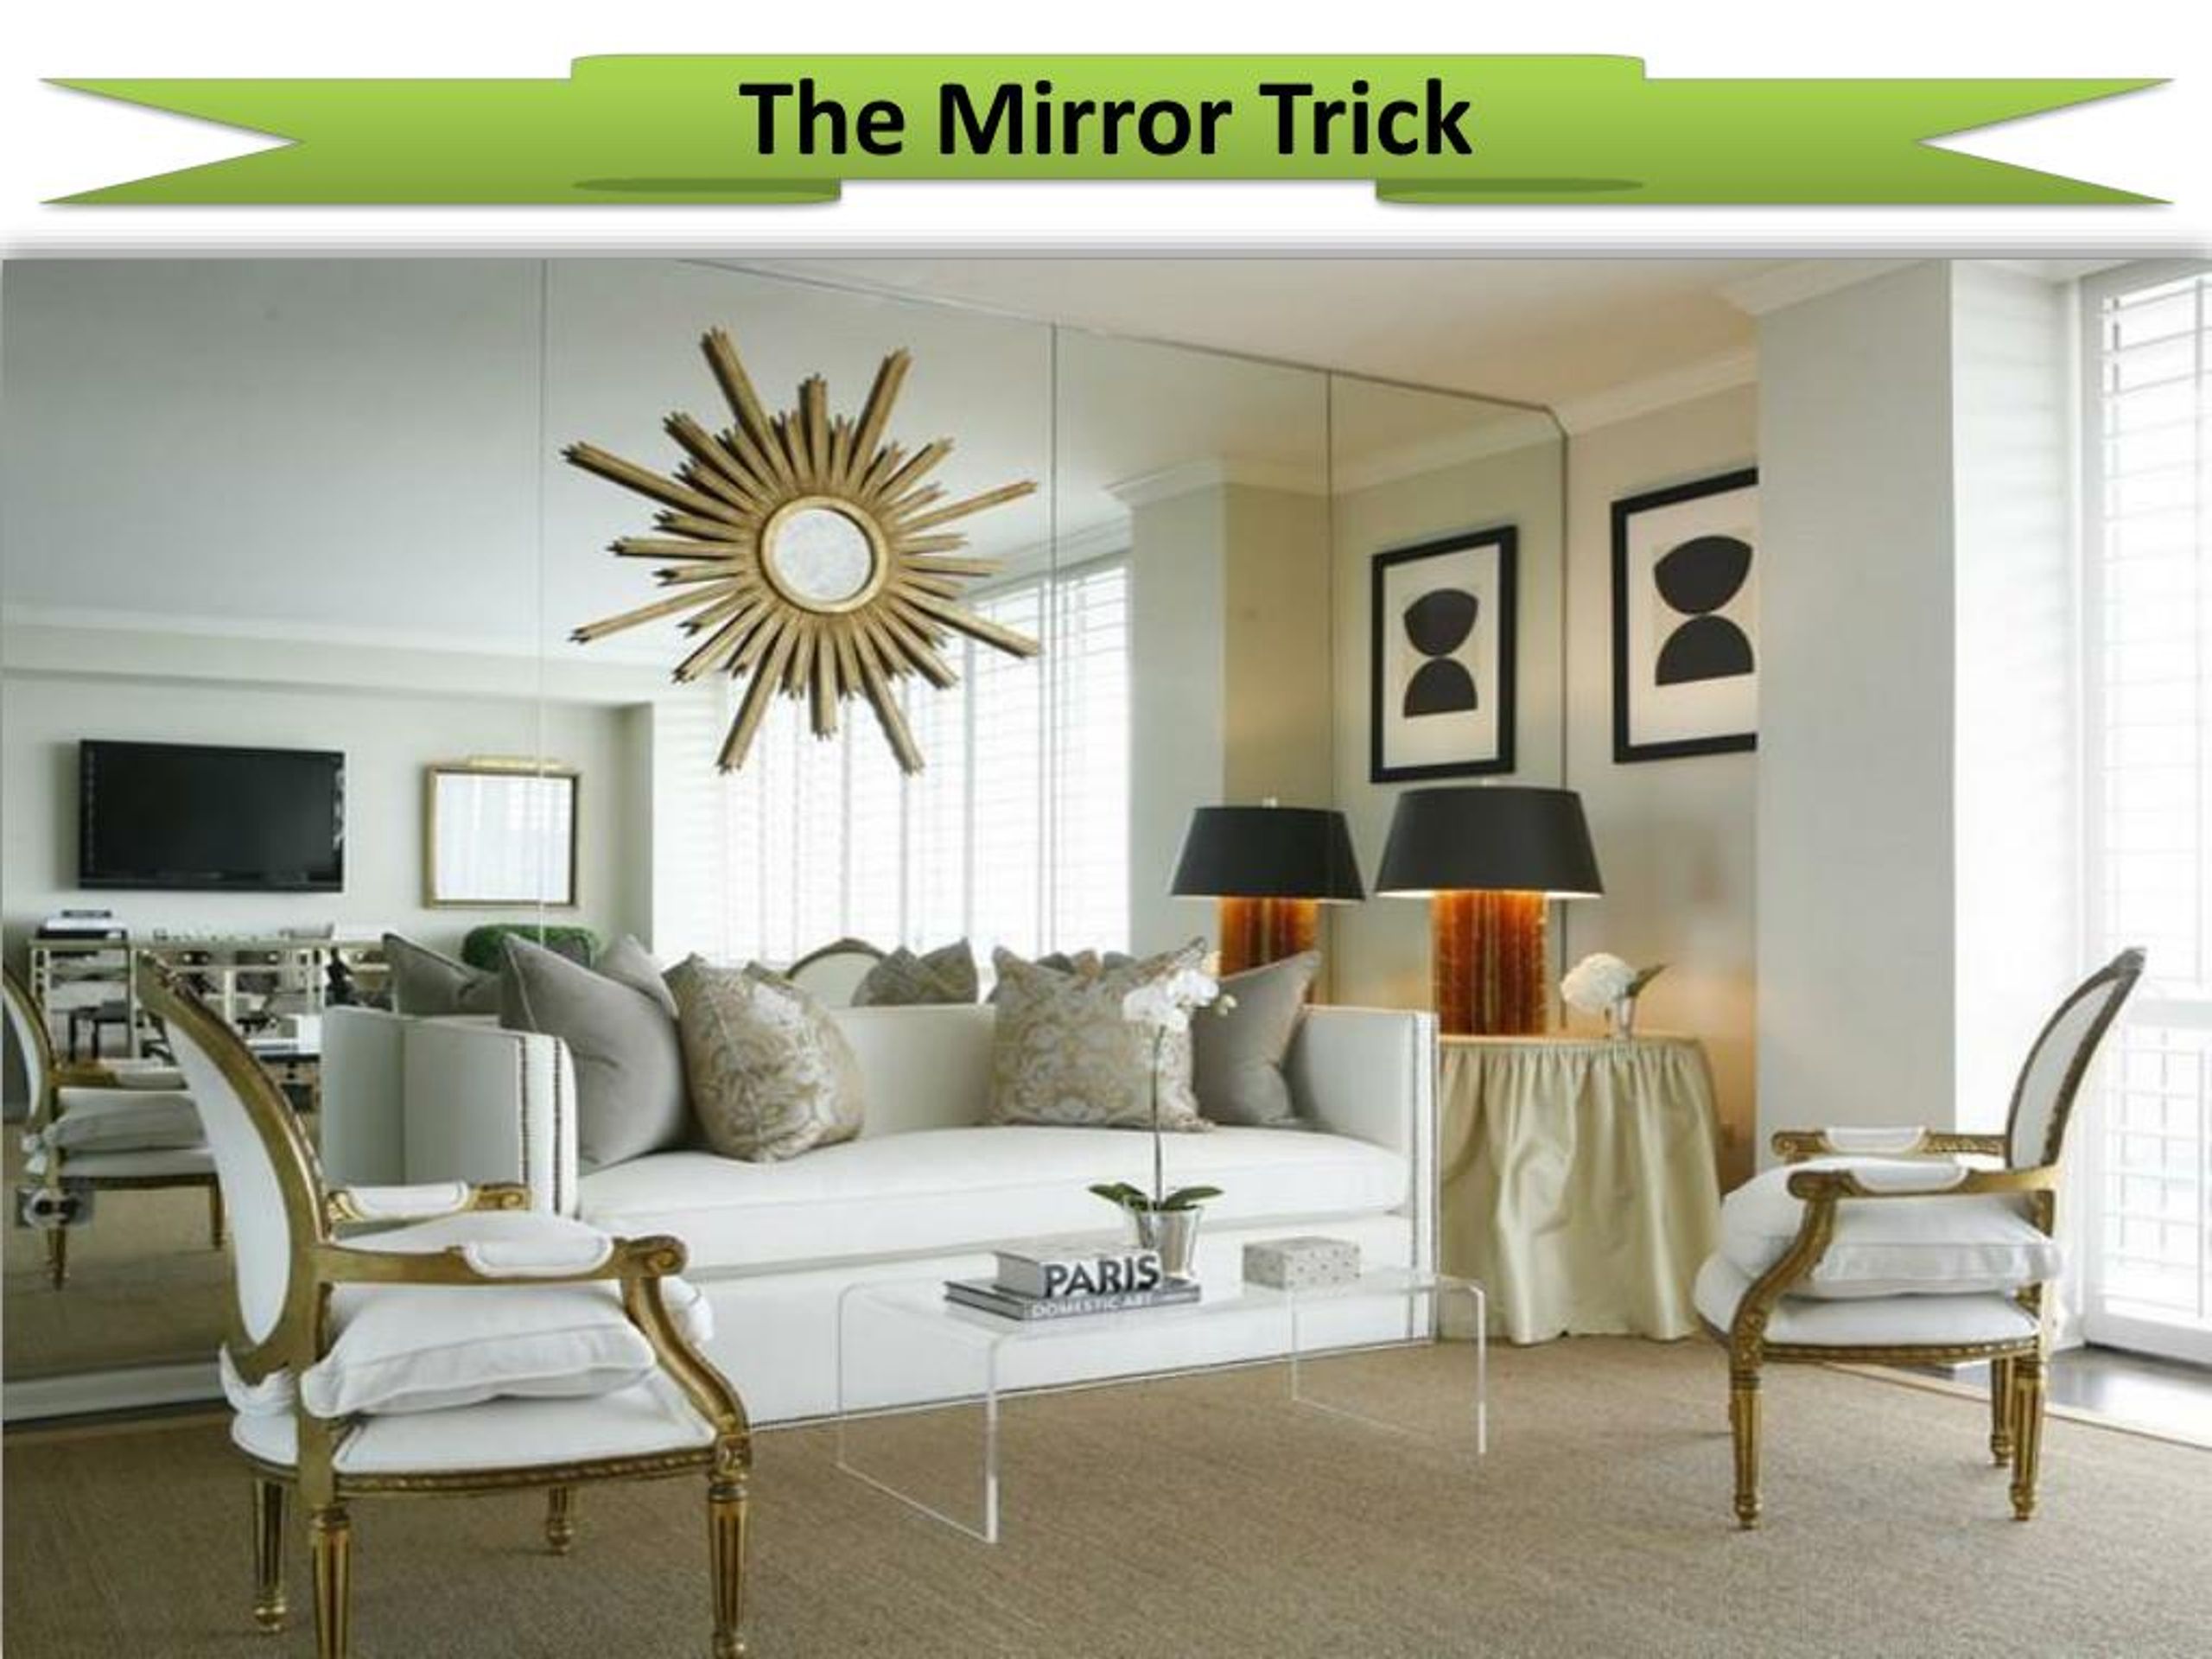 https://image4.slideserve.com/7845012/the-mirror-trick-l.jpg